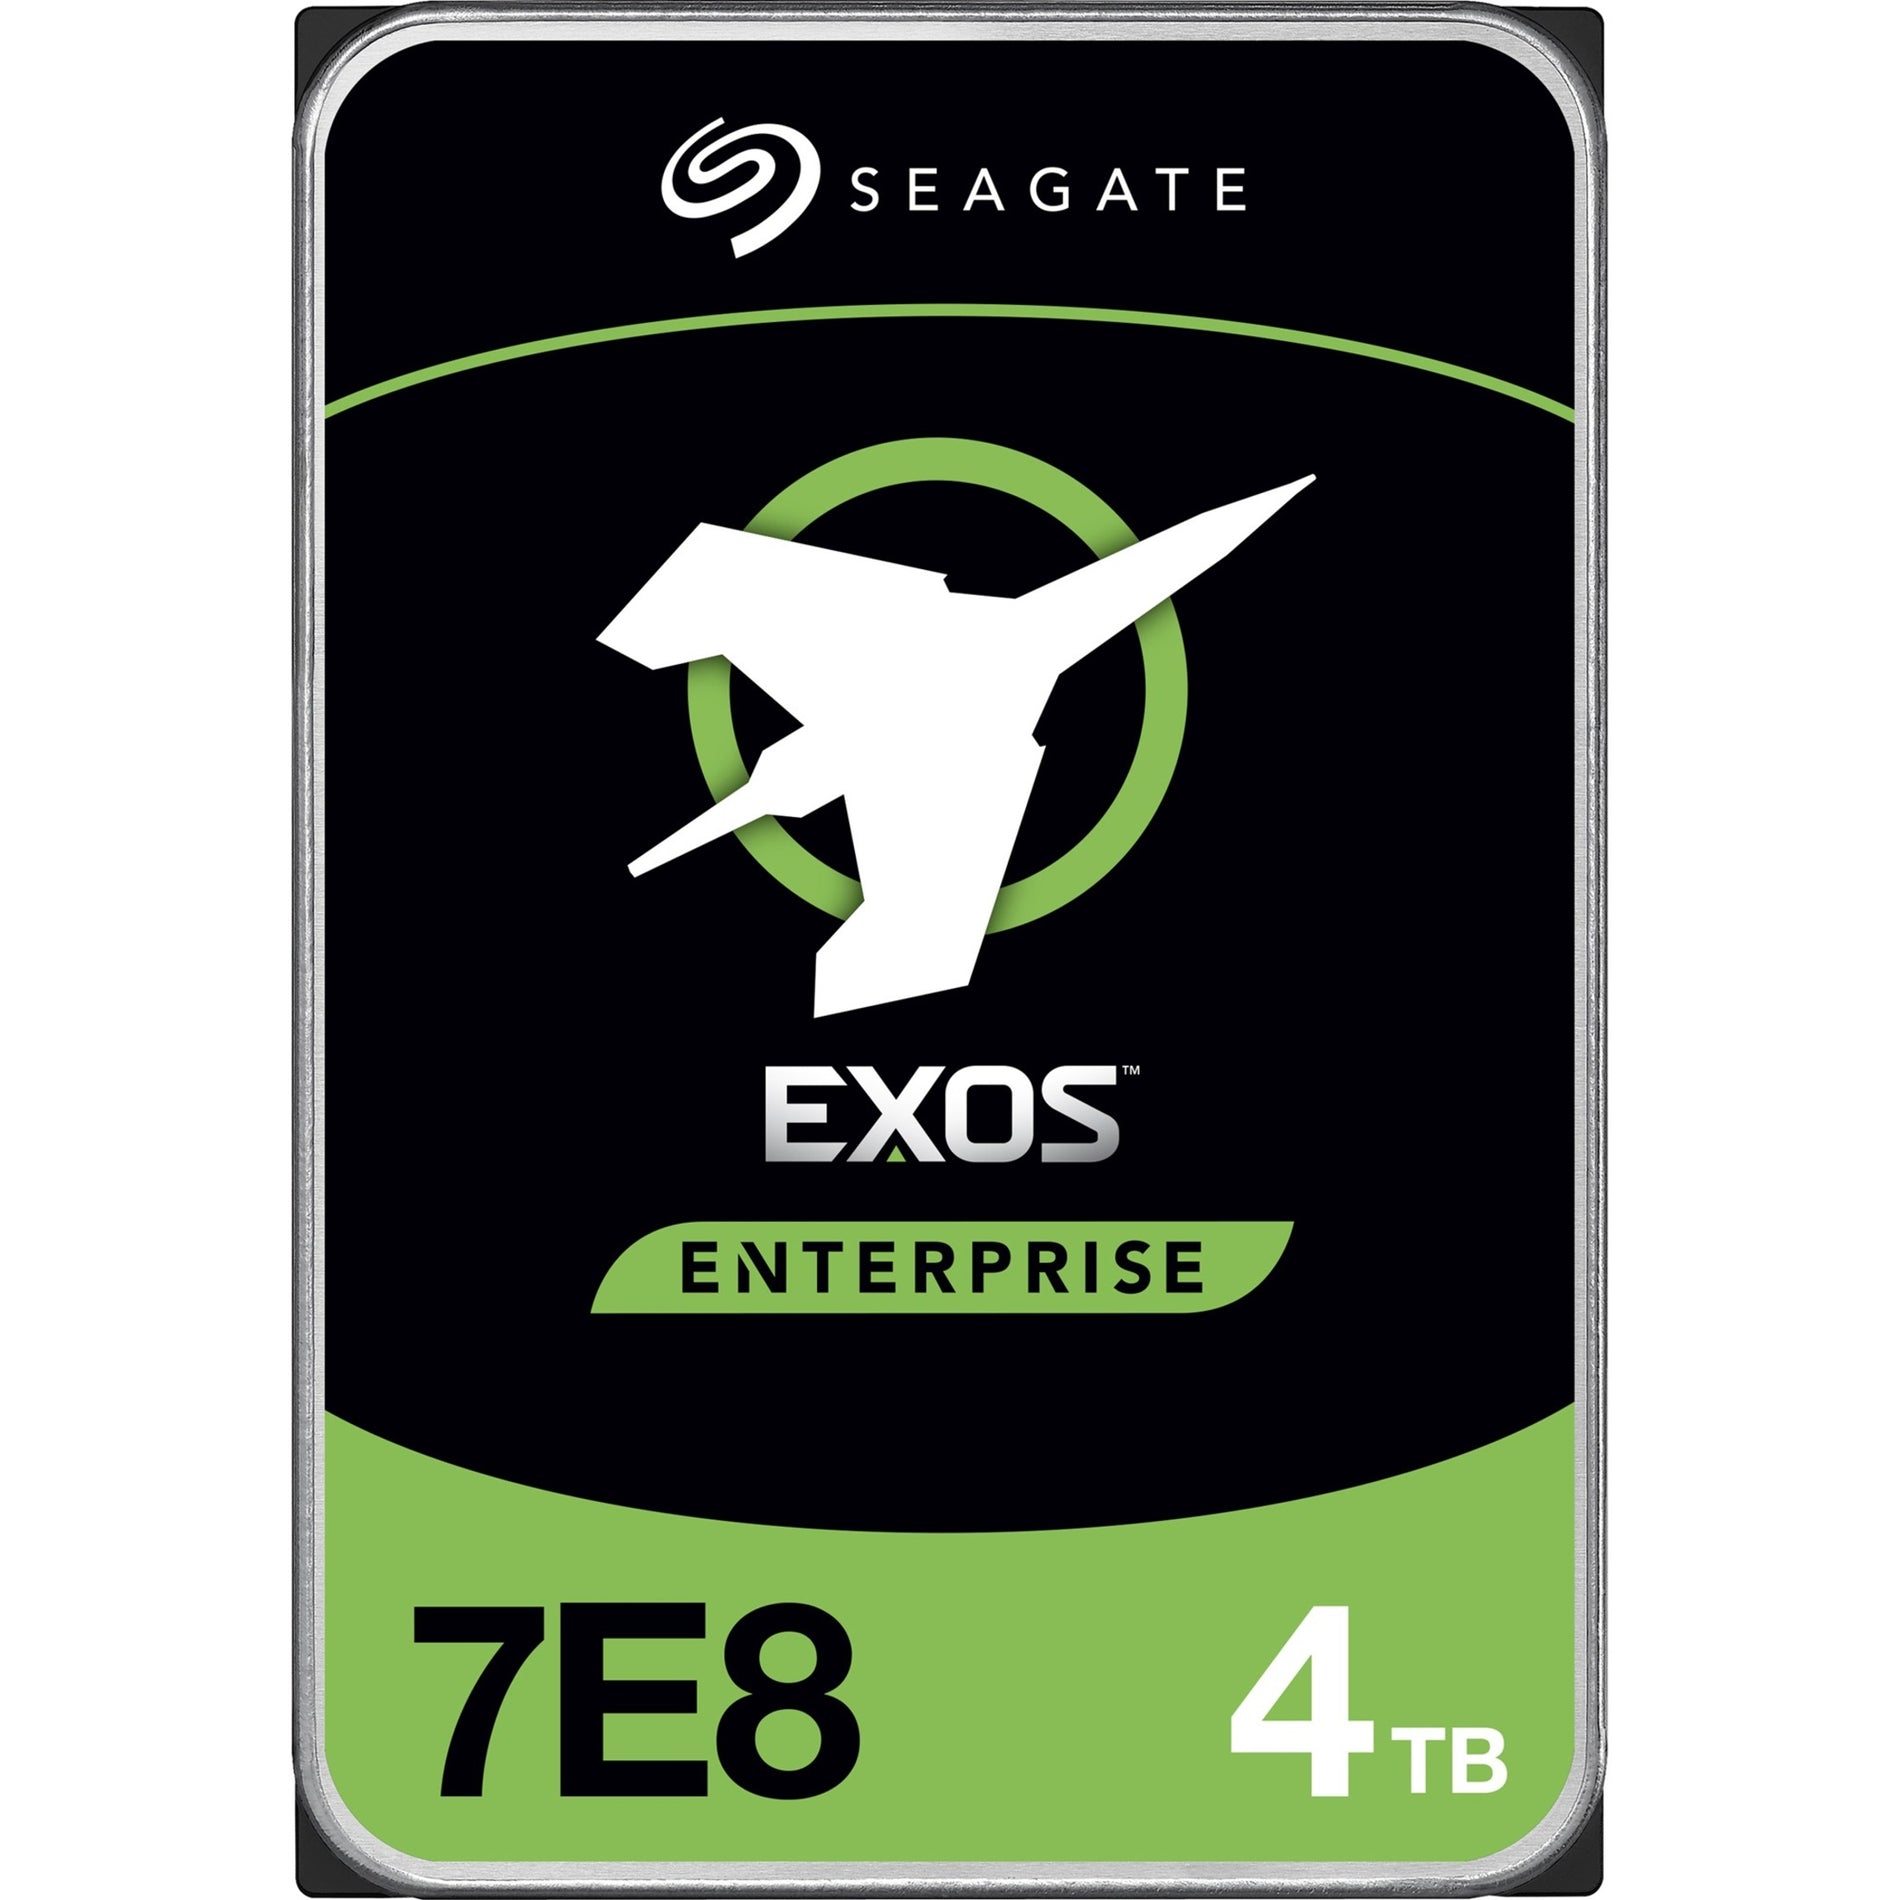 Seagate-IMSourcing ST4000NM002A Exos 7E8 Hard Drive, 4TB Storage Capacity, 7200 RPM, SATA/600